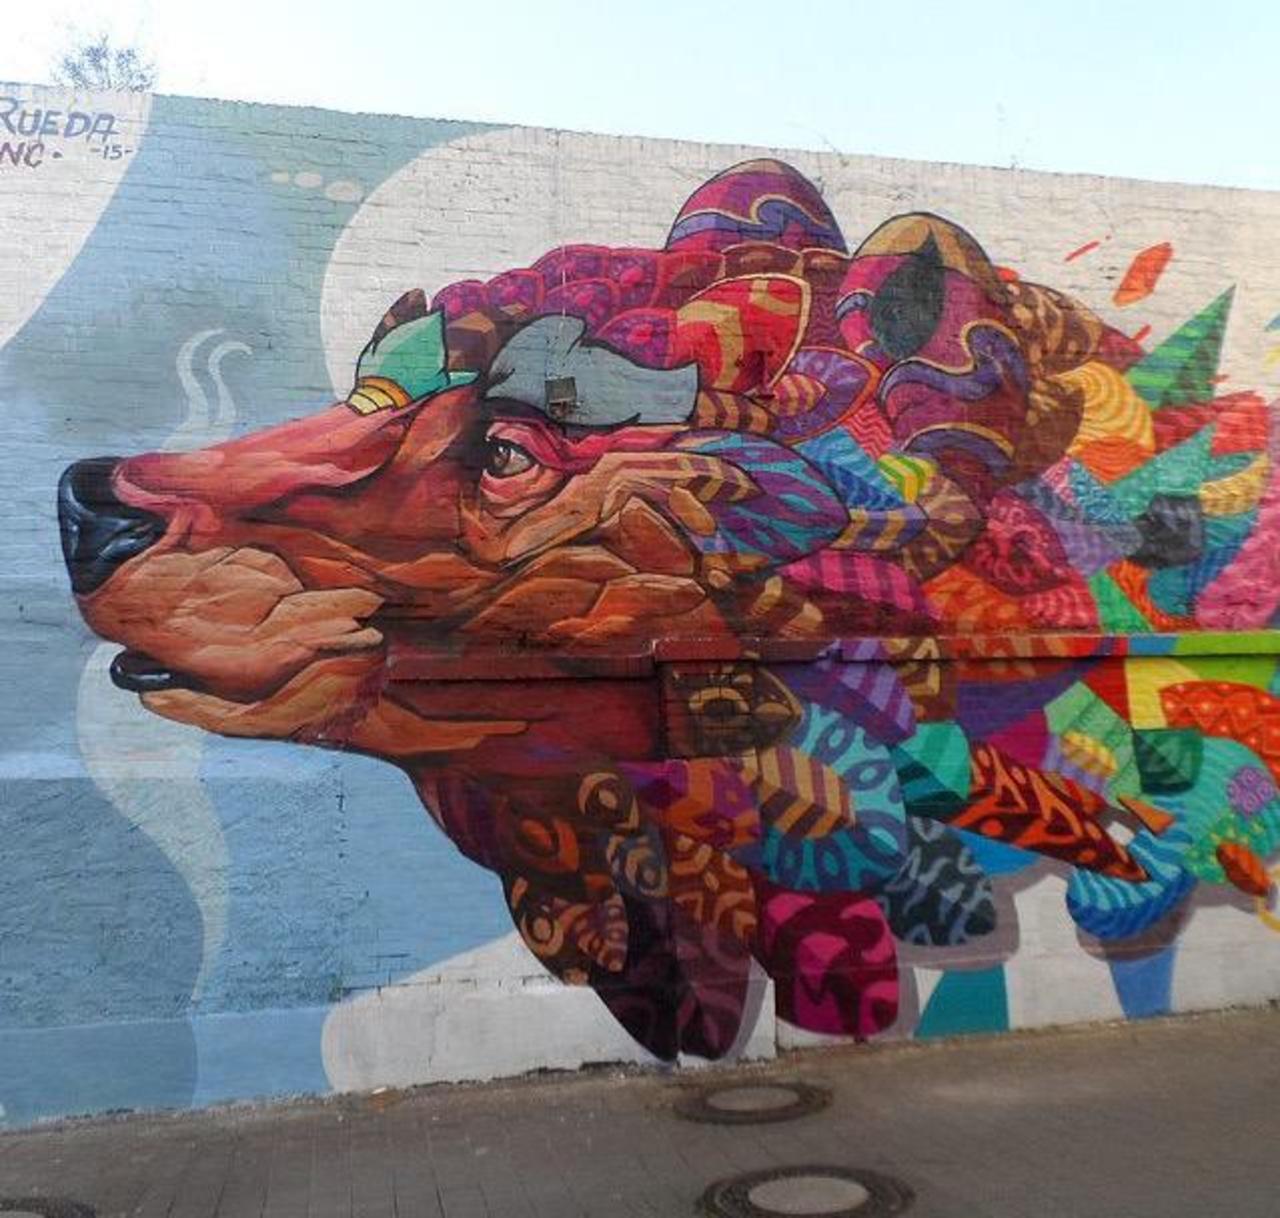 Farid Rueda Street Art 

#art #graffiti #mural #streetart http://t.co/6xvDzJG3D4